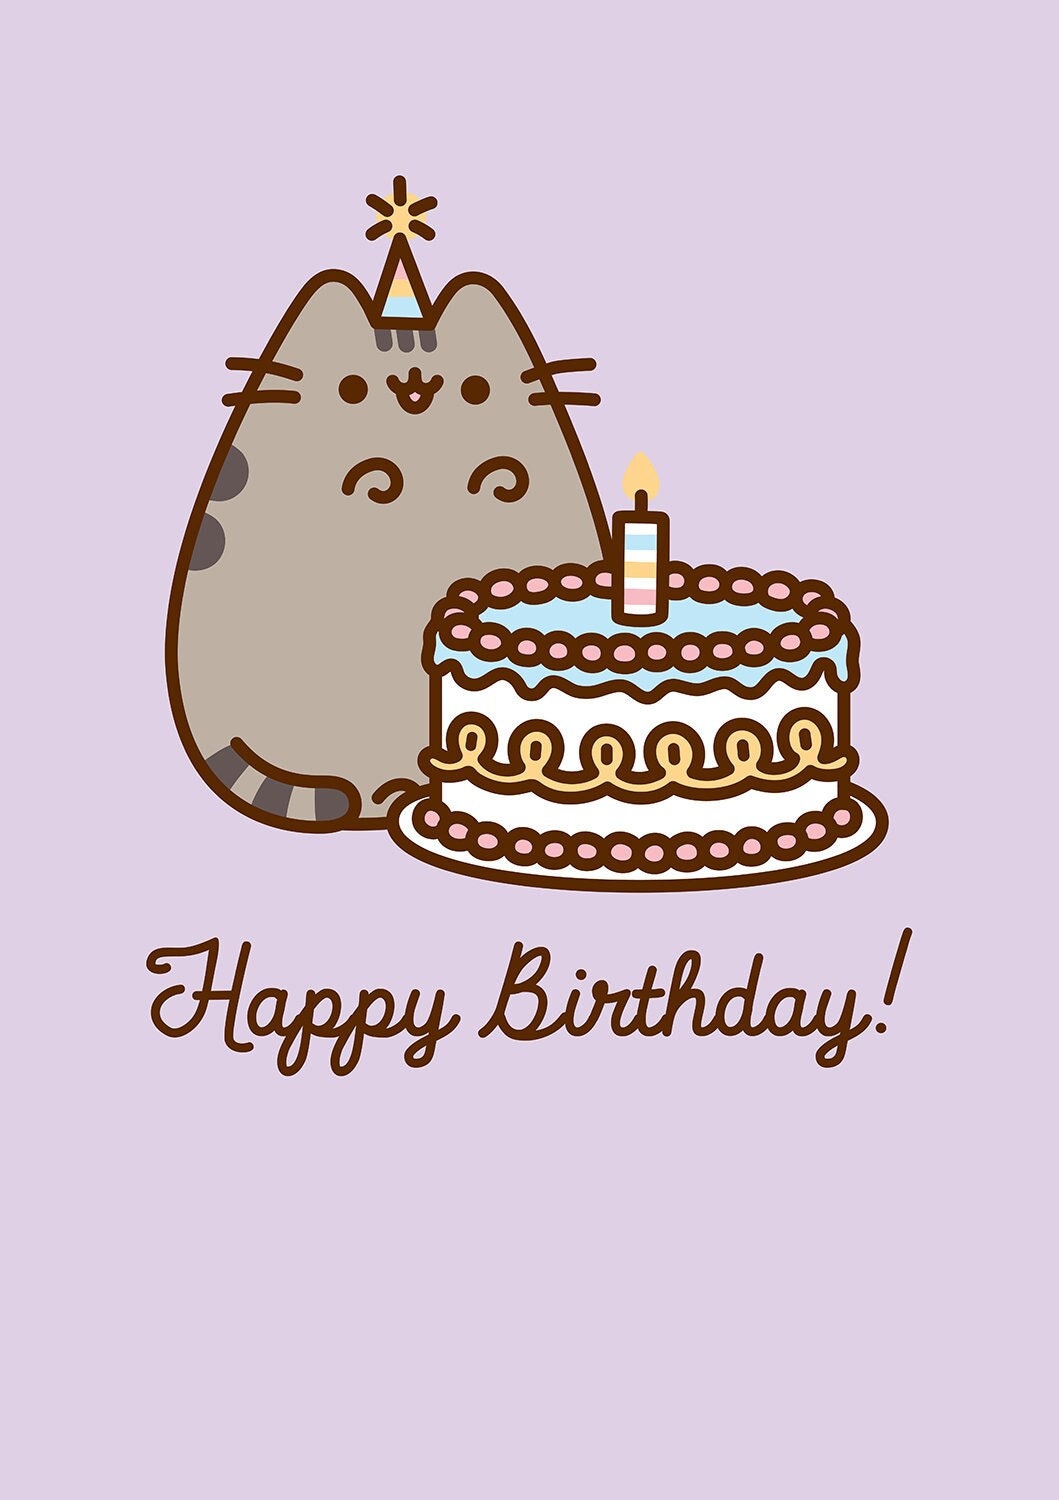 Pusheen the Cat Blank Birthday Cake Card - Etsy